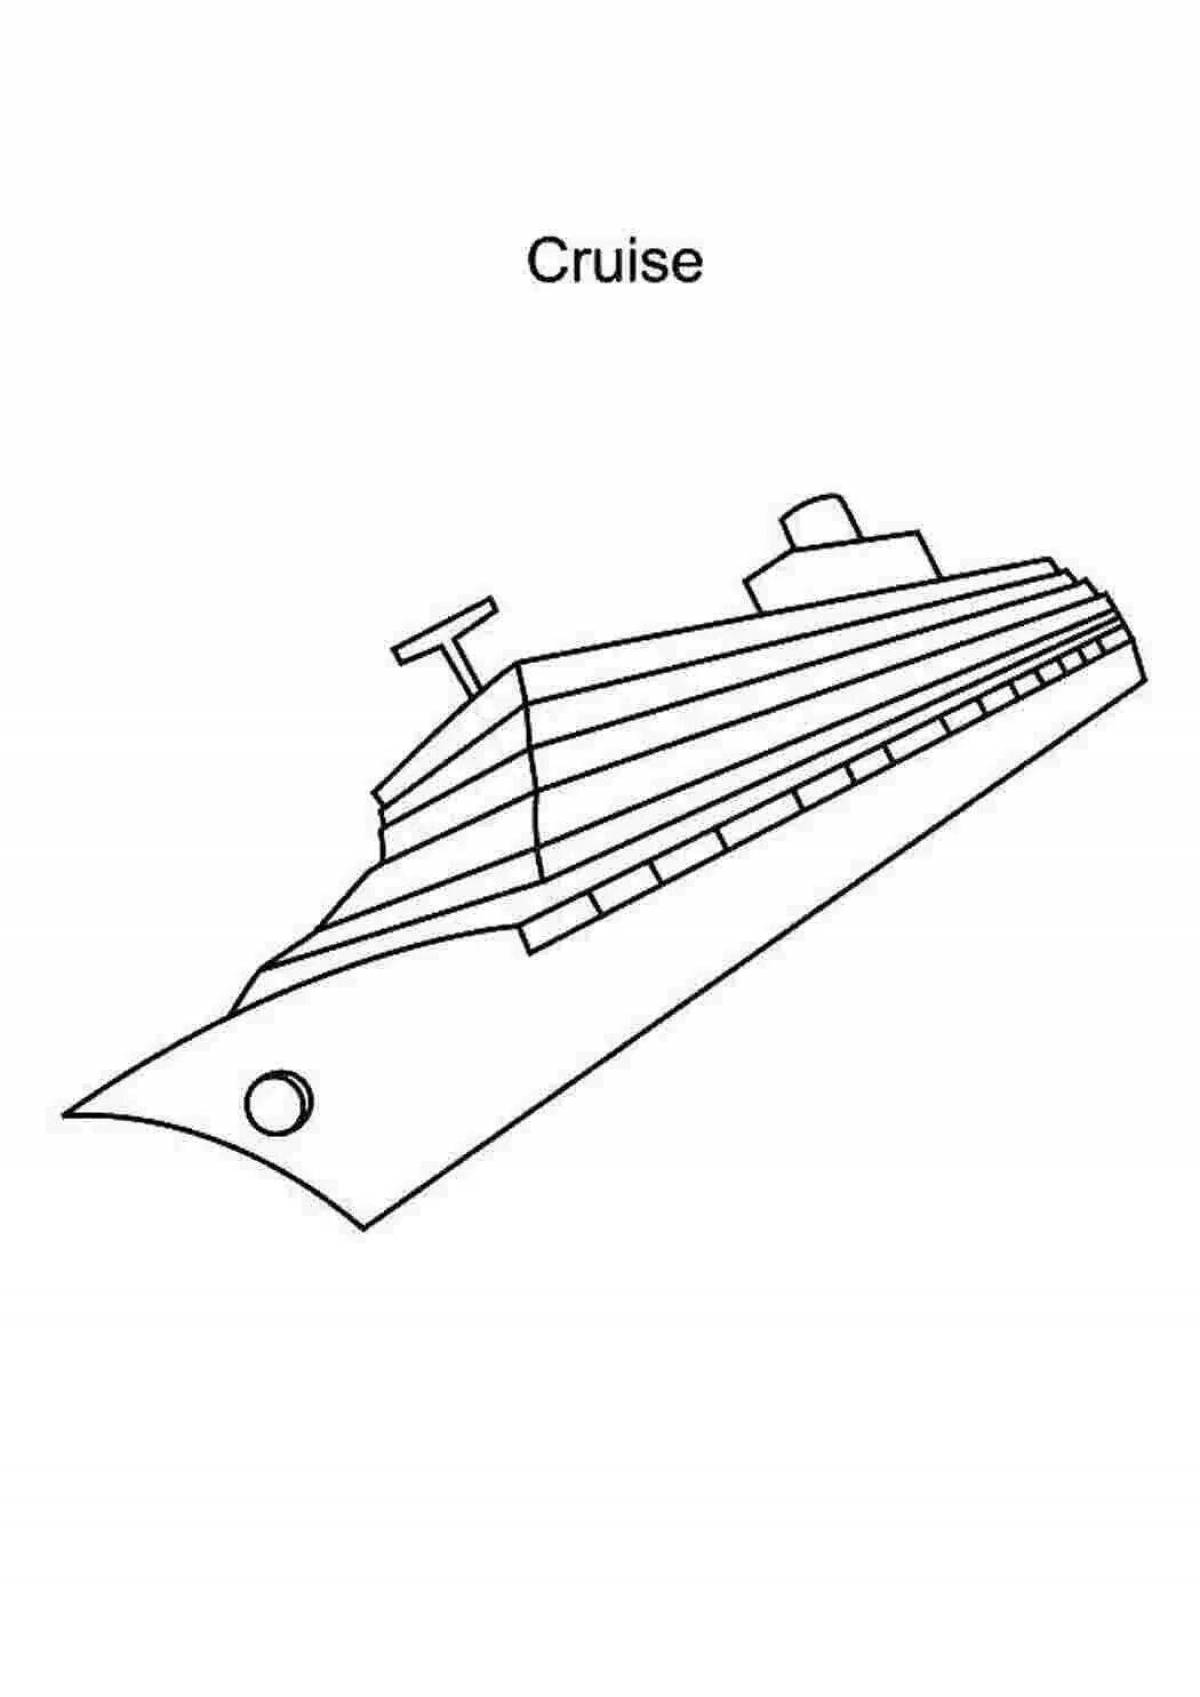 Decorative passenger ship coloring page